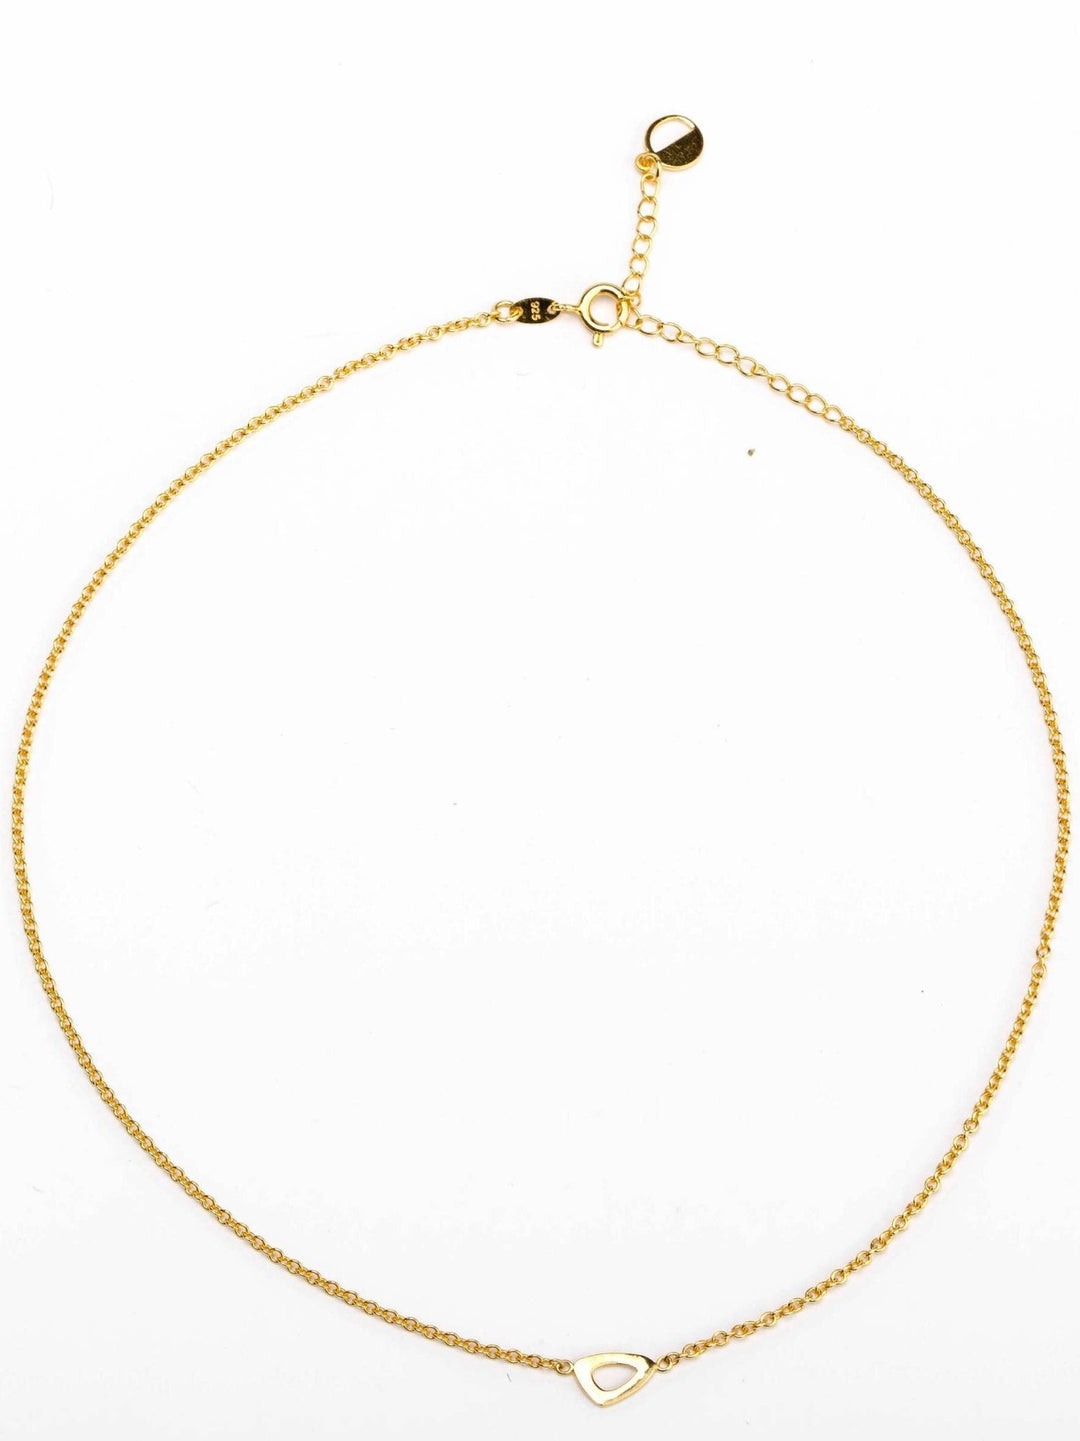 Zunilda Charm Ckoker - 24K Gold PlatedAdjustable NecklaceAnniversary GiftLunai Jewelry